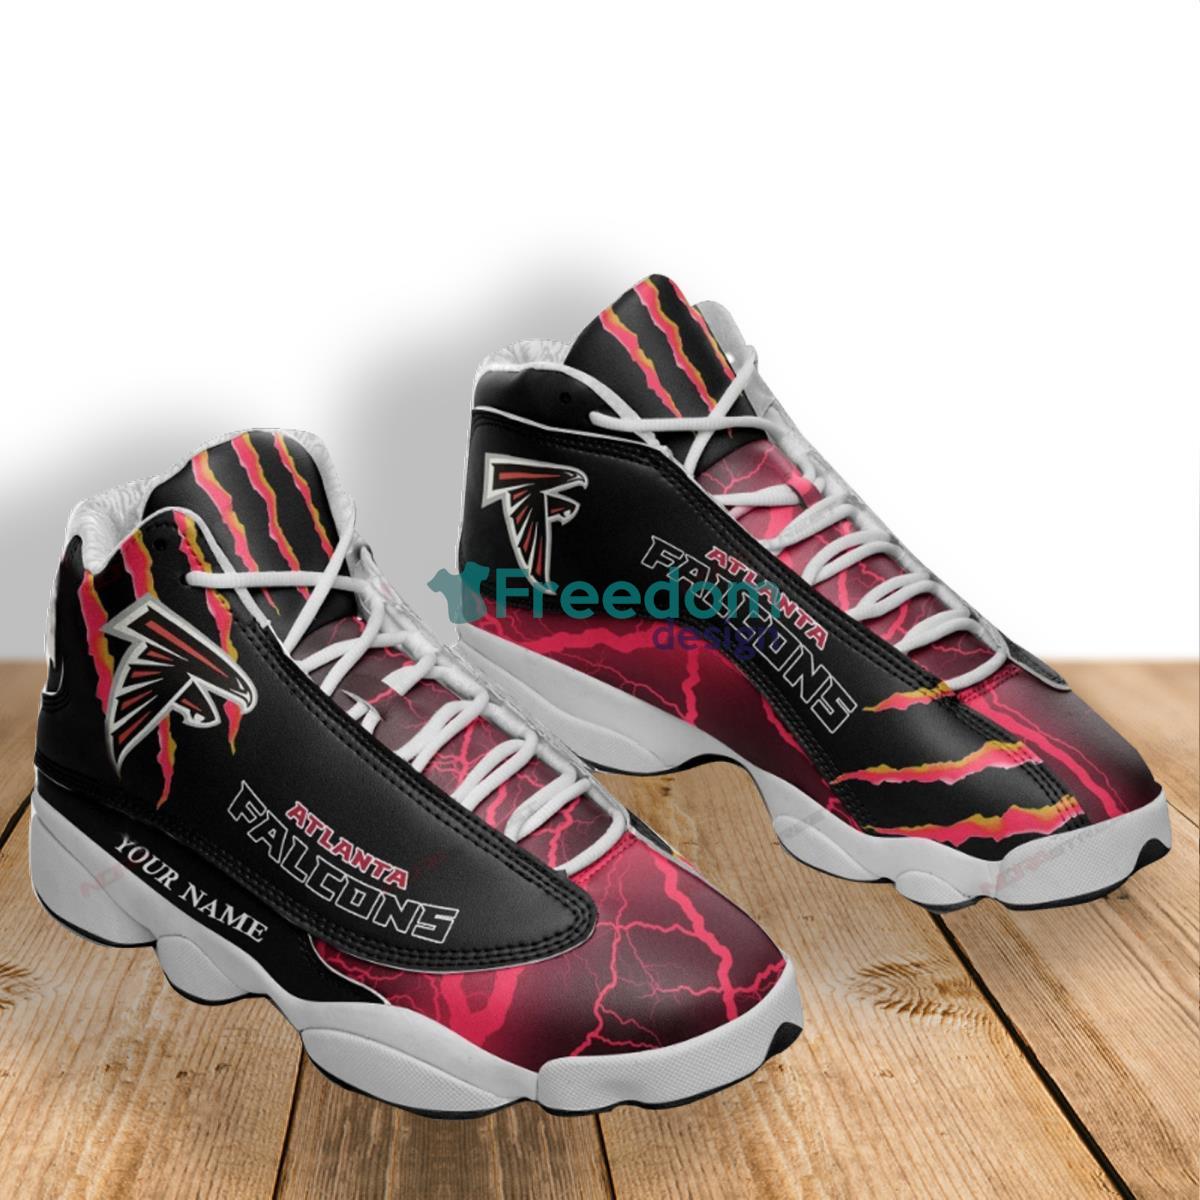 Alanta Falcons Football Team Air Jordan 13 Shoes Product Photo 1